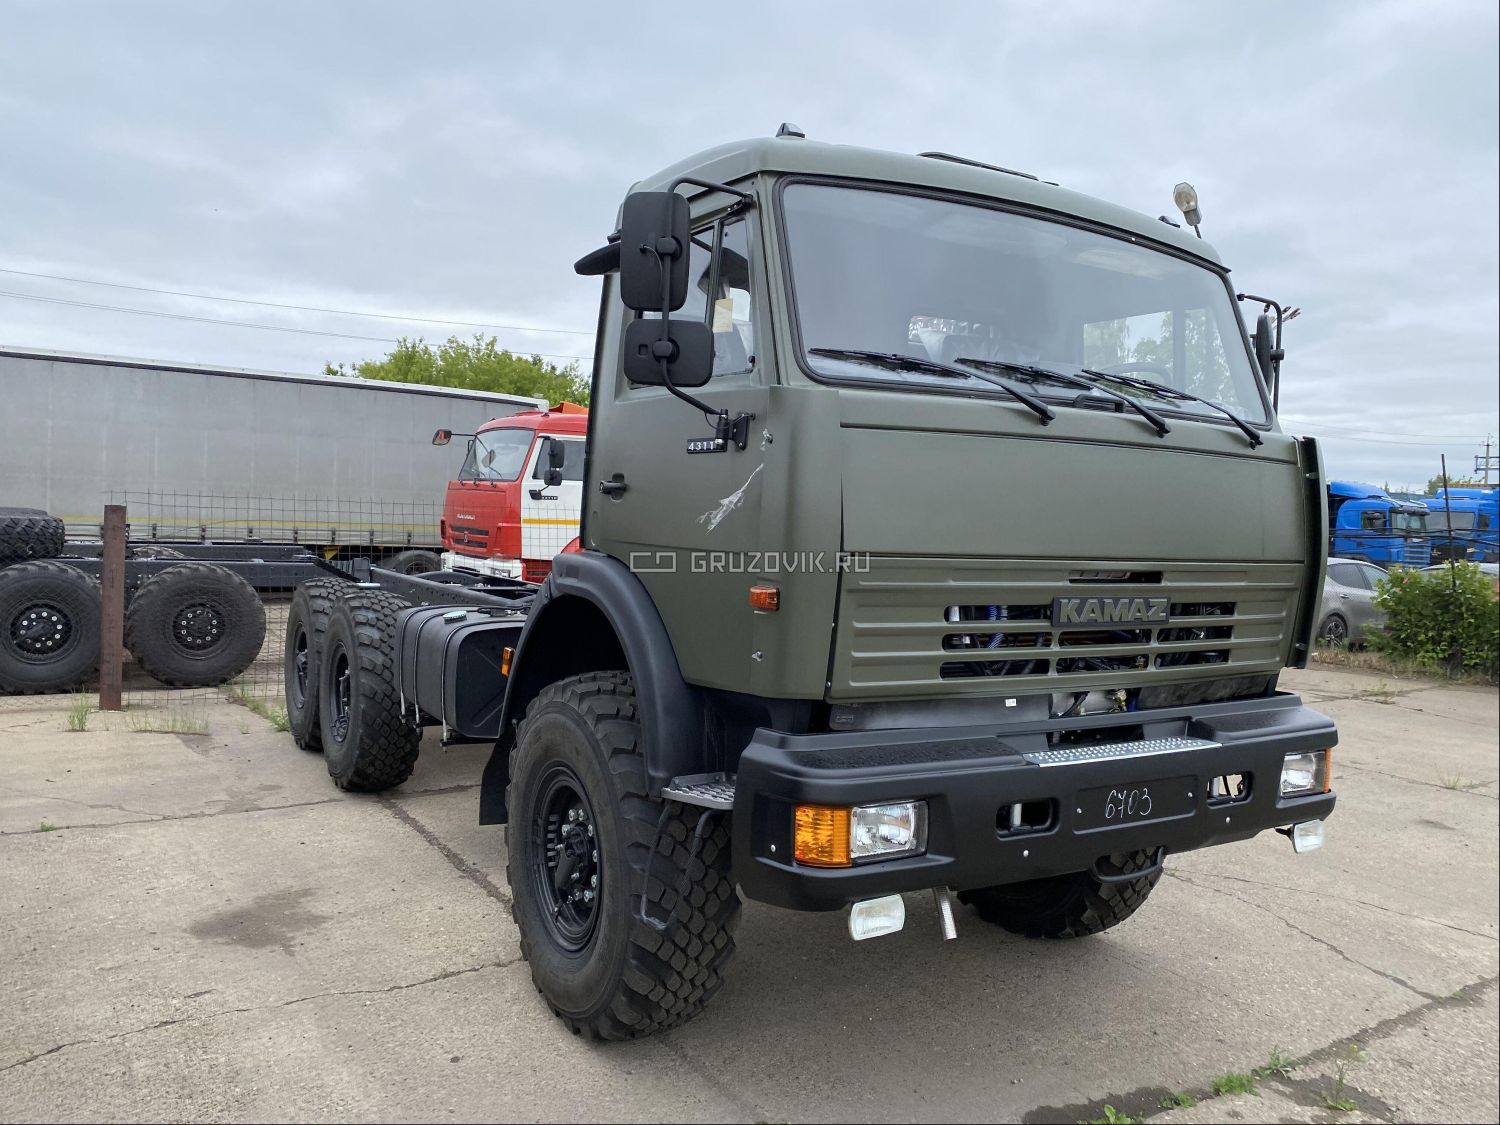 Новый Шасси грузовика КАМАЗ 431118 в продаже  на Gruzovik.ru, 5 500 000 ₽